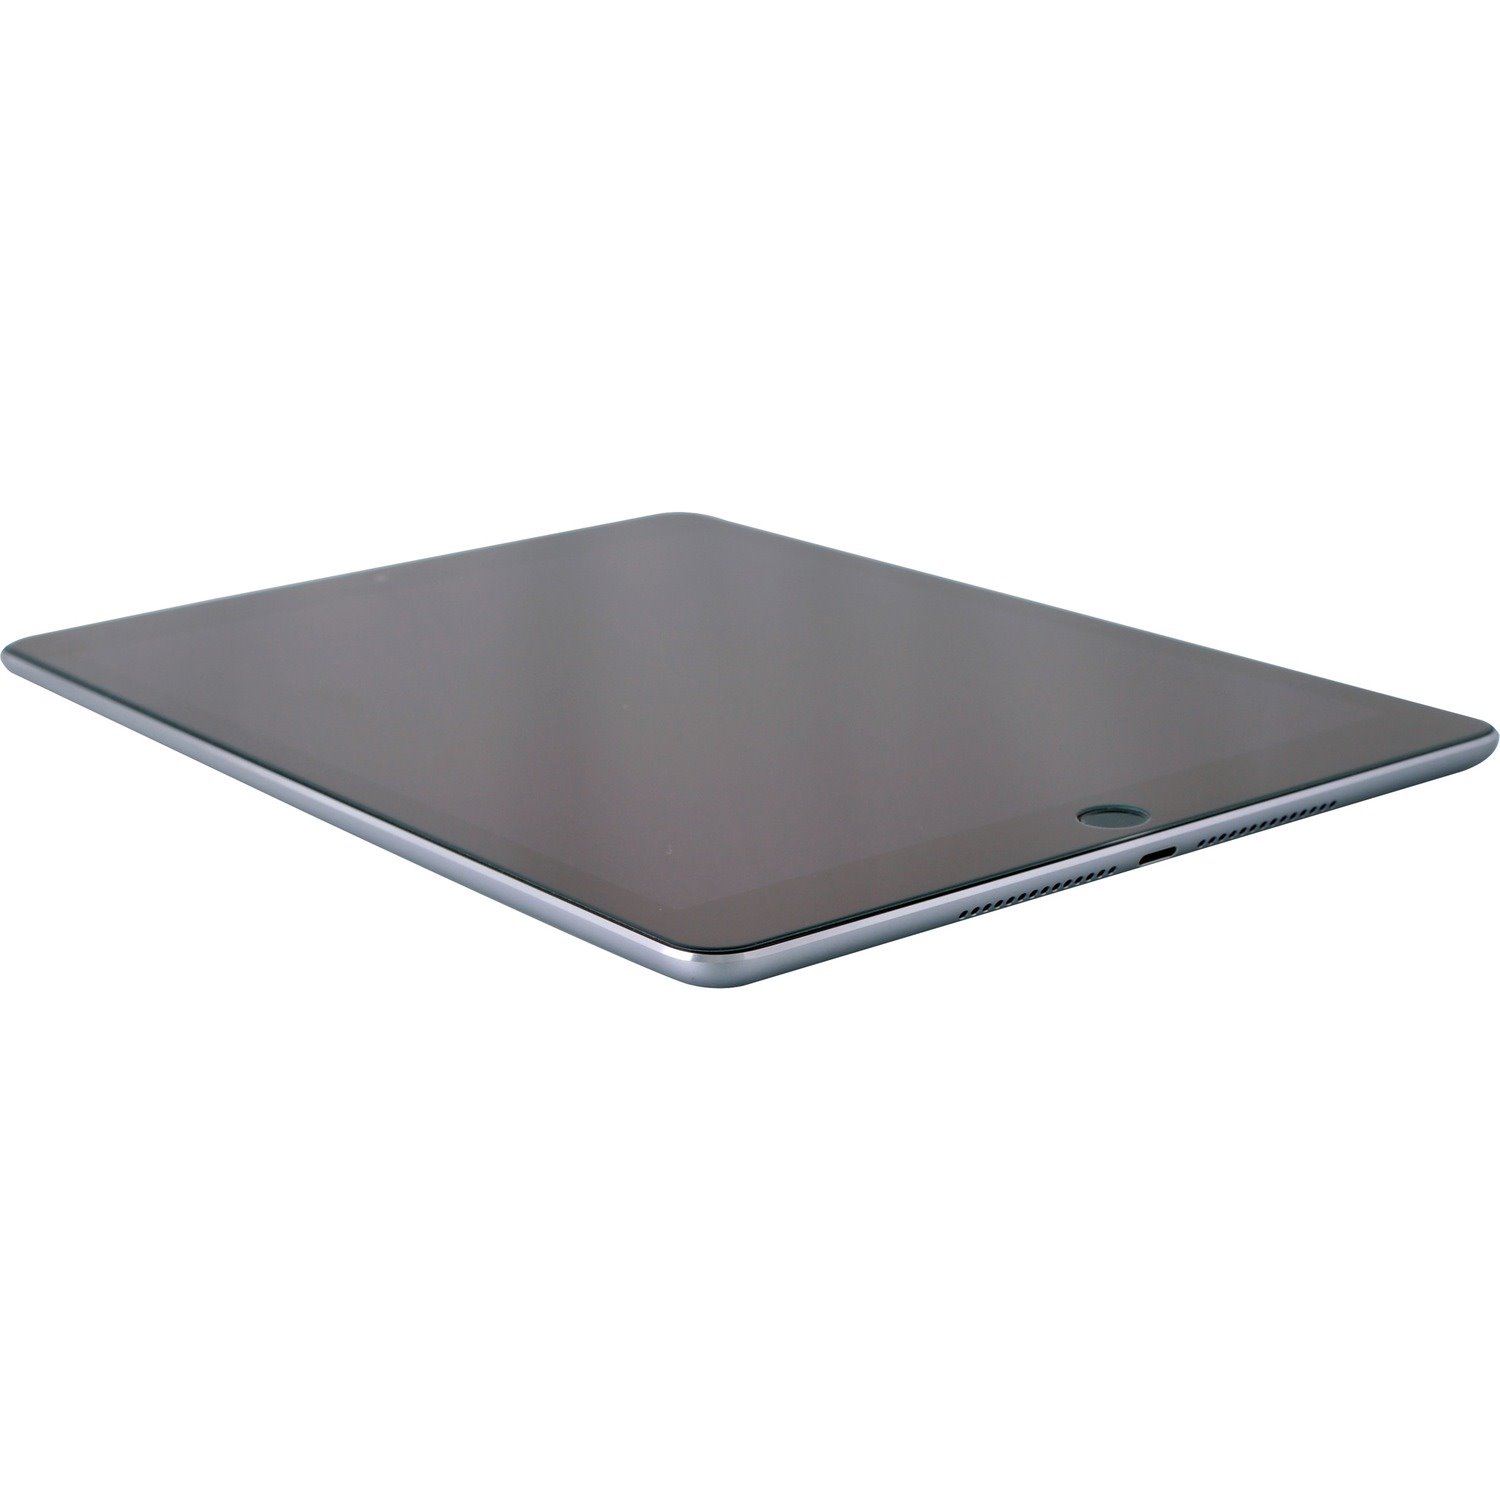 Codi Tempered Glass Screen Protector for iPad Air & Air 2 Clear